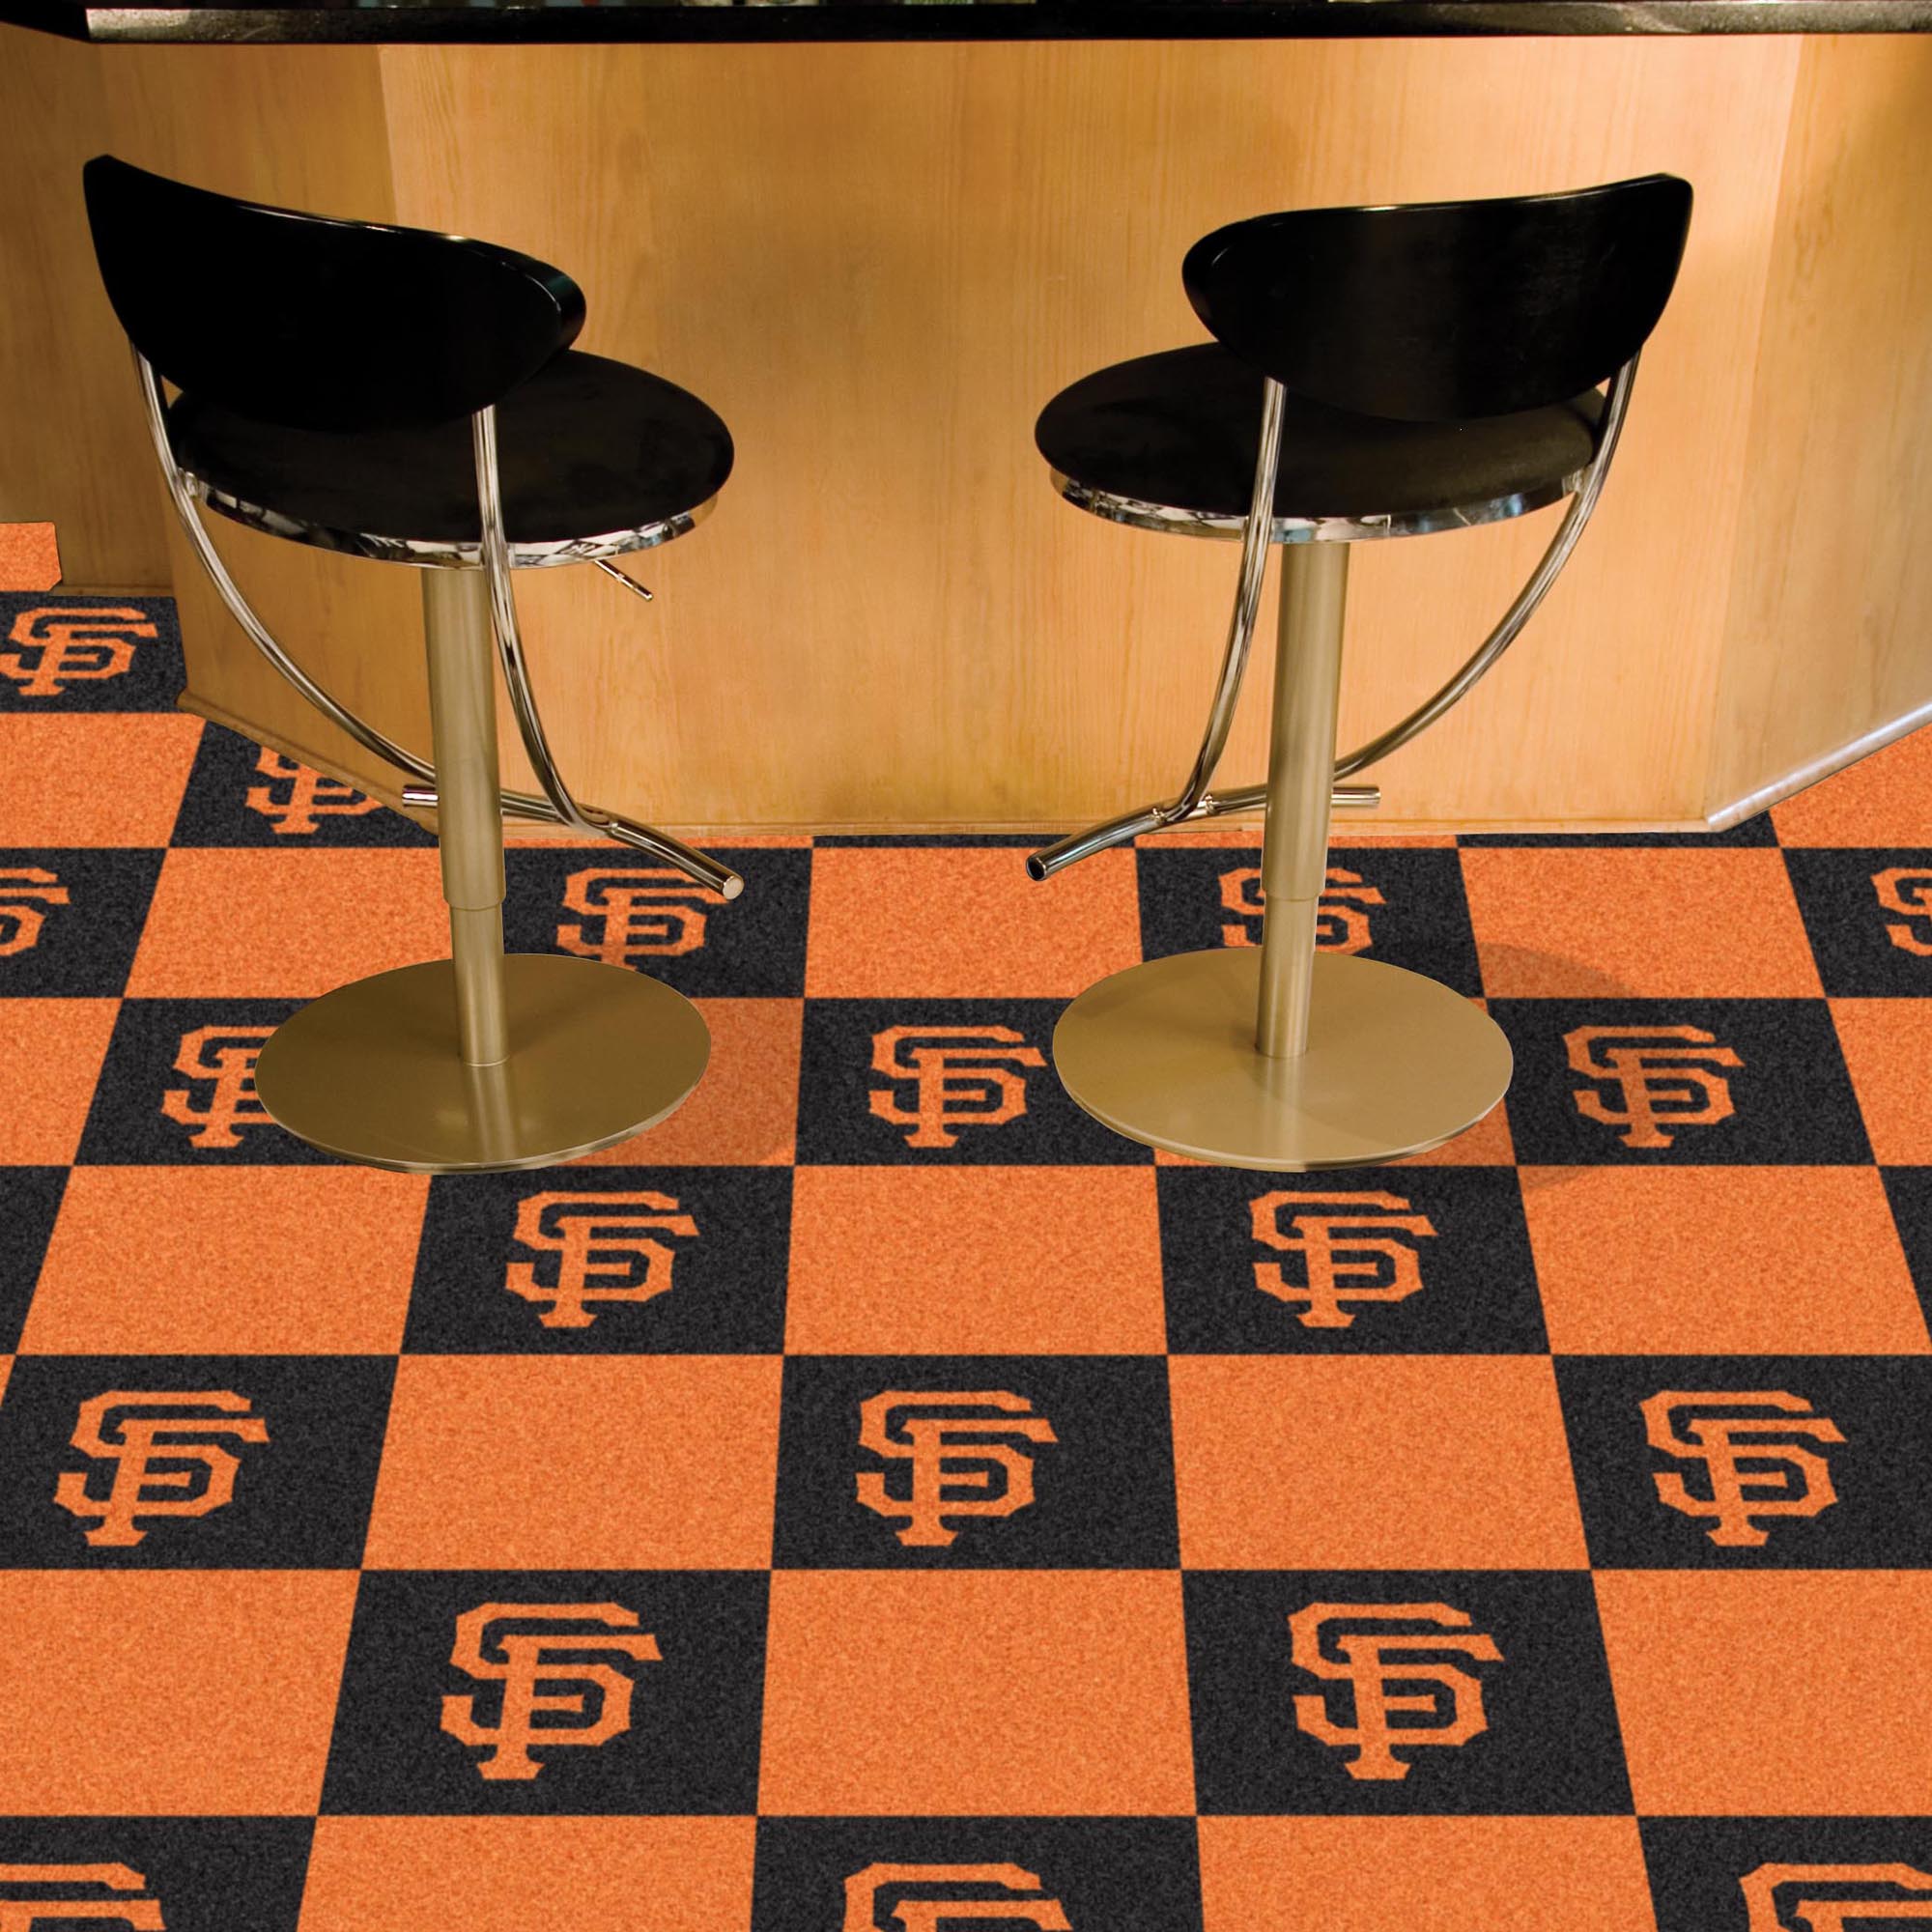 San Francisco Giants Team Carpet Tiles - 45 sq ft